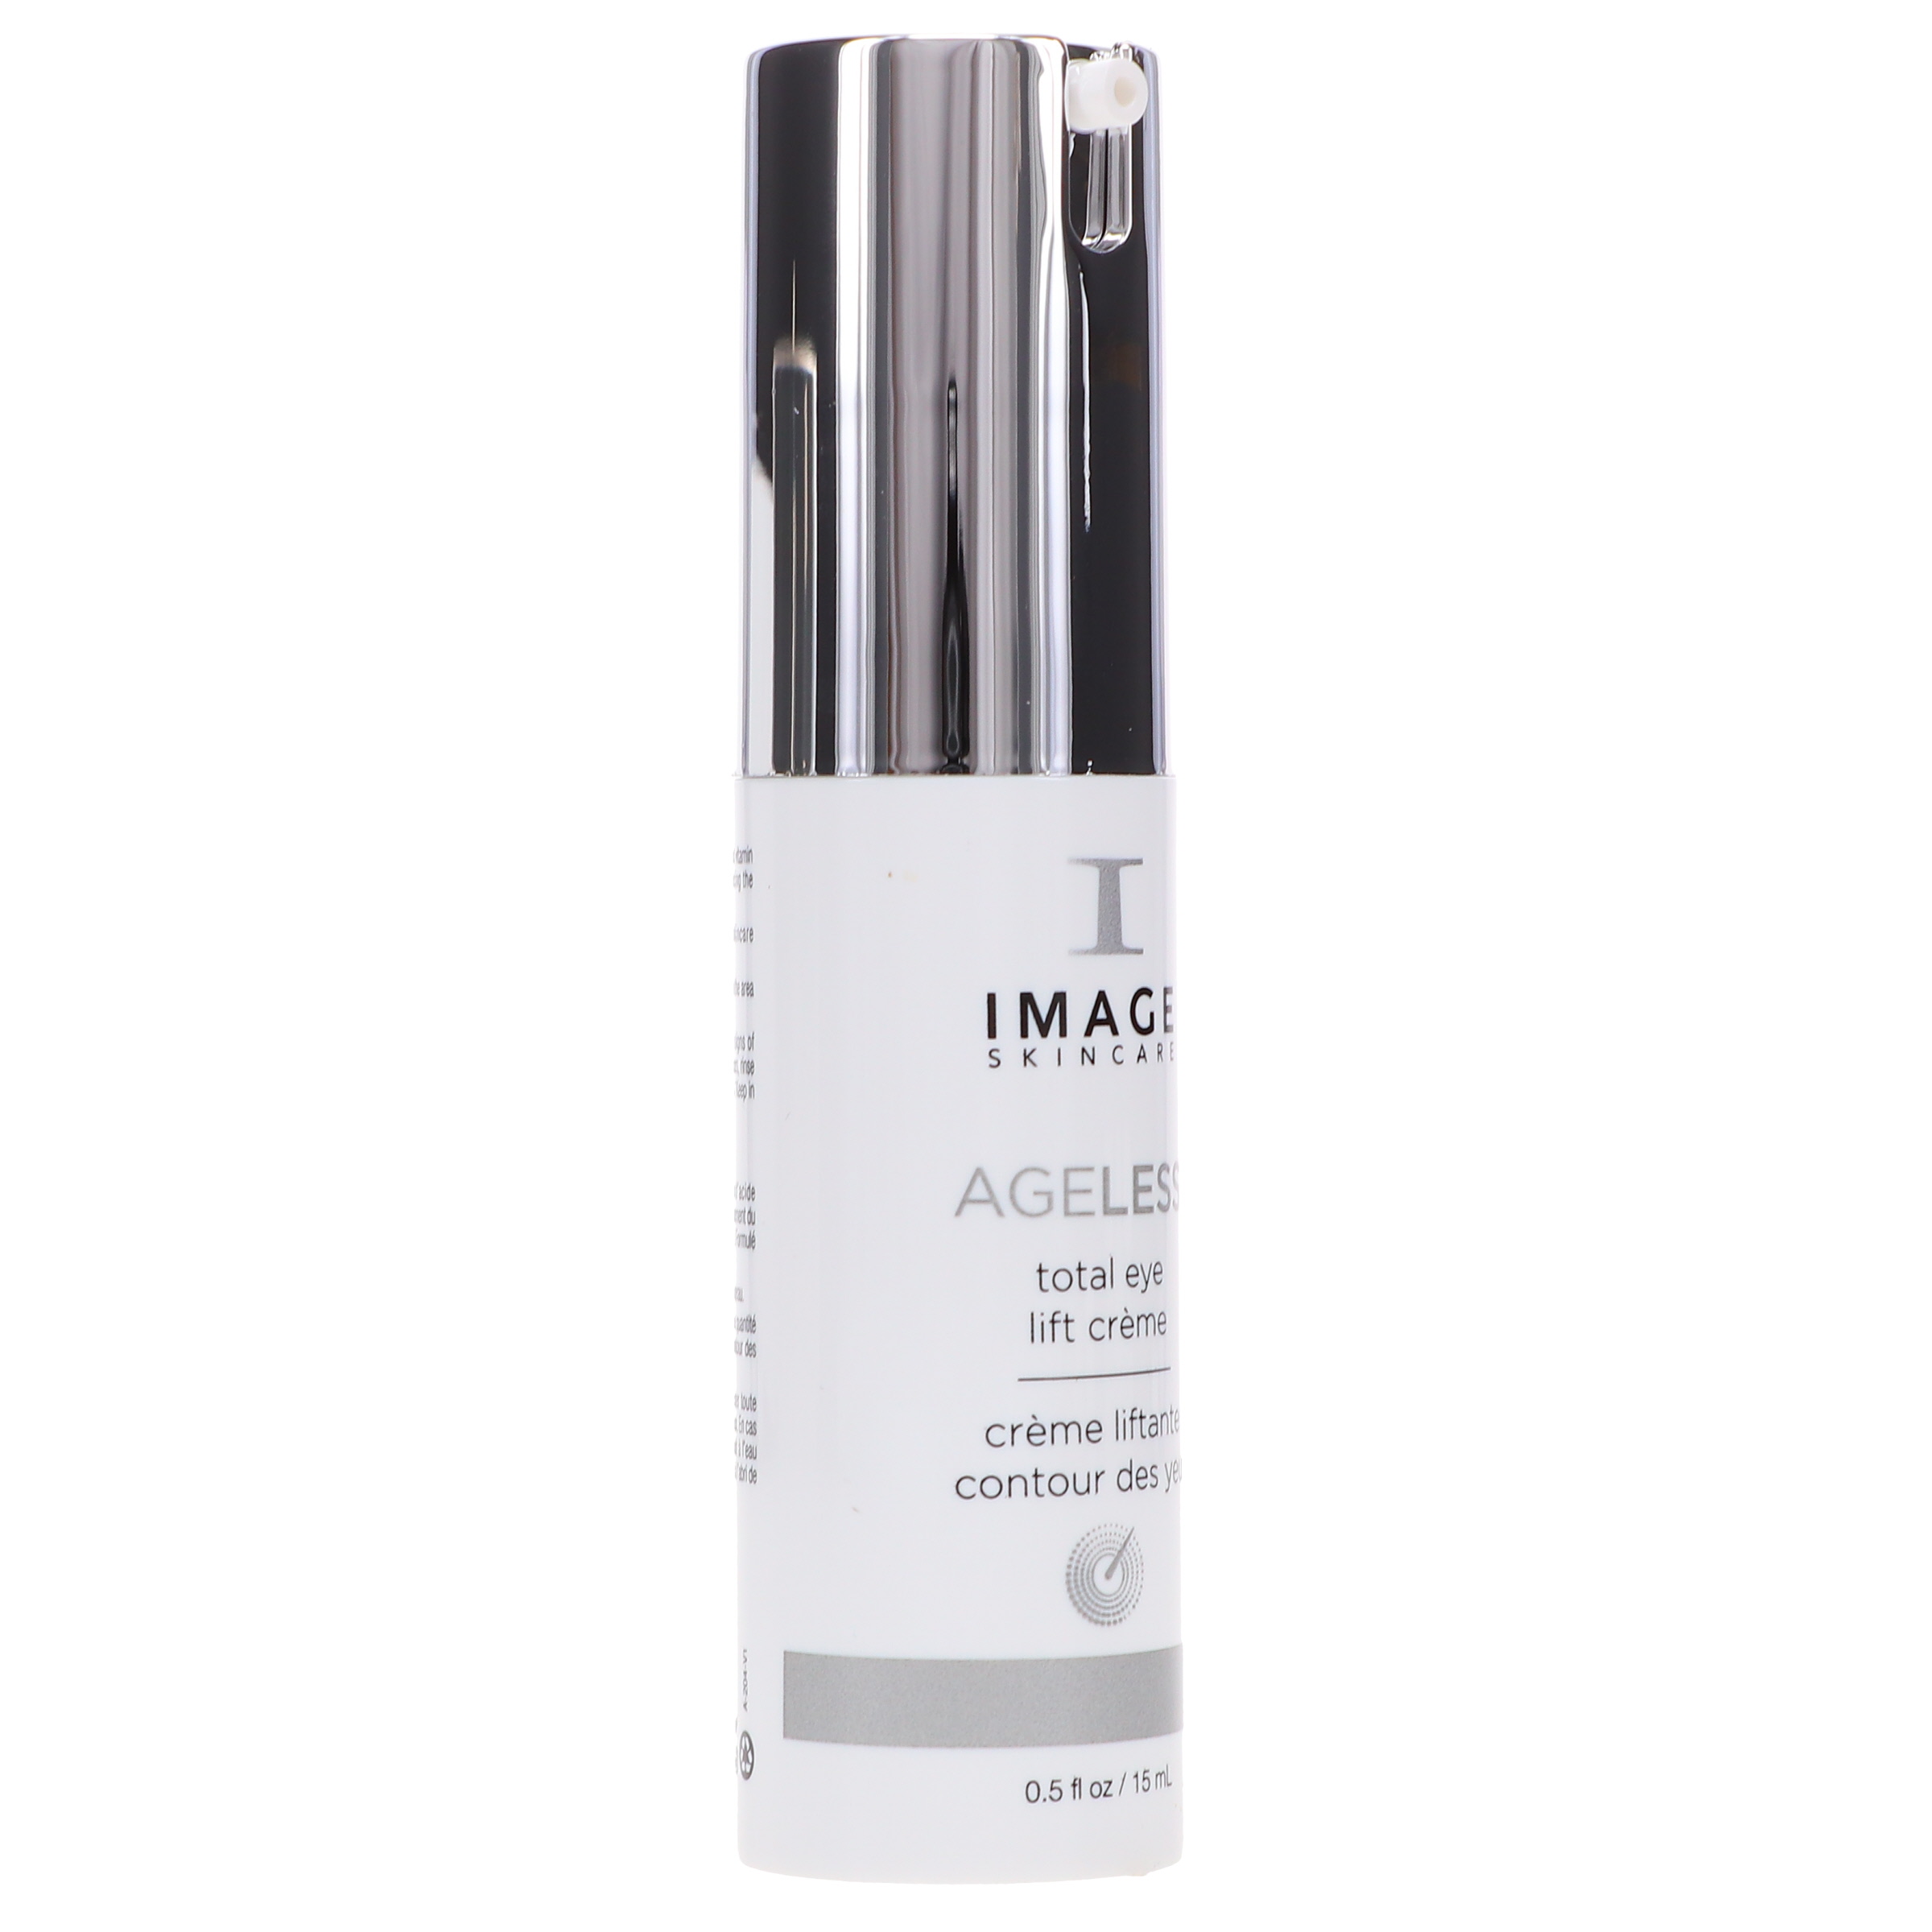 IMAGE Skincare Ageless Total Eye Lift Creme 0.5 oz - image 5 of 8